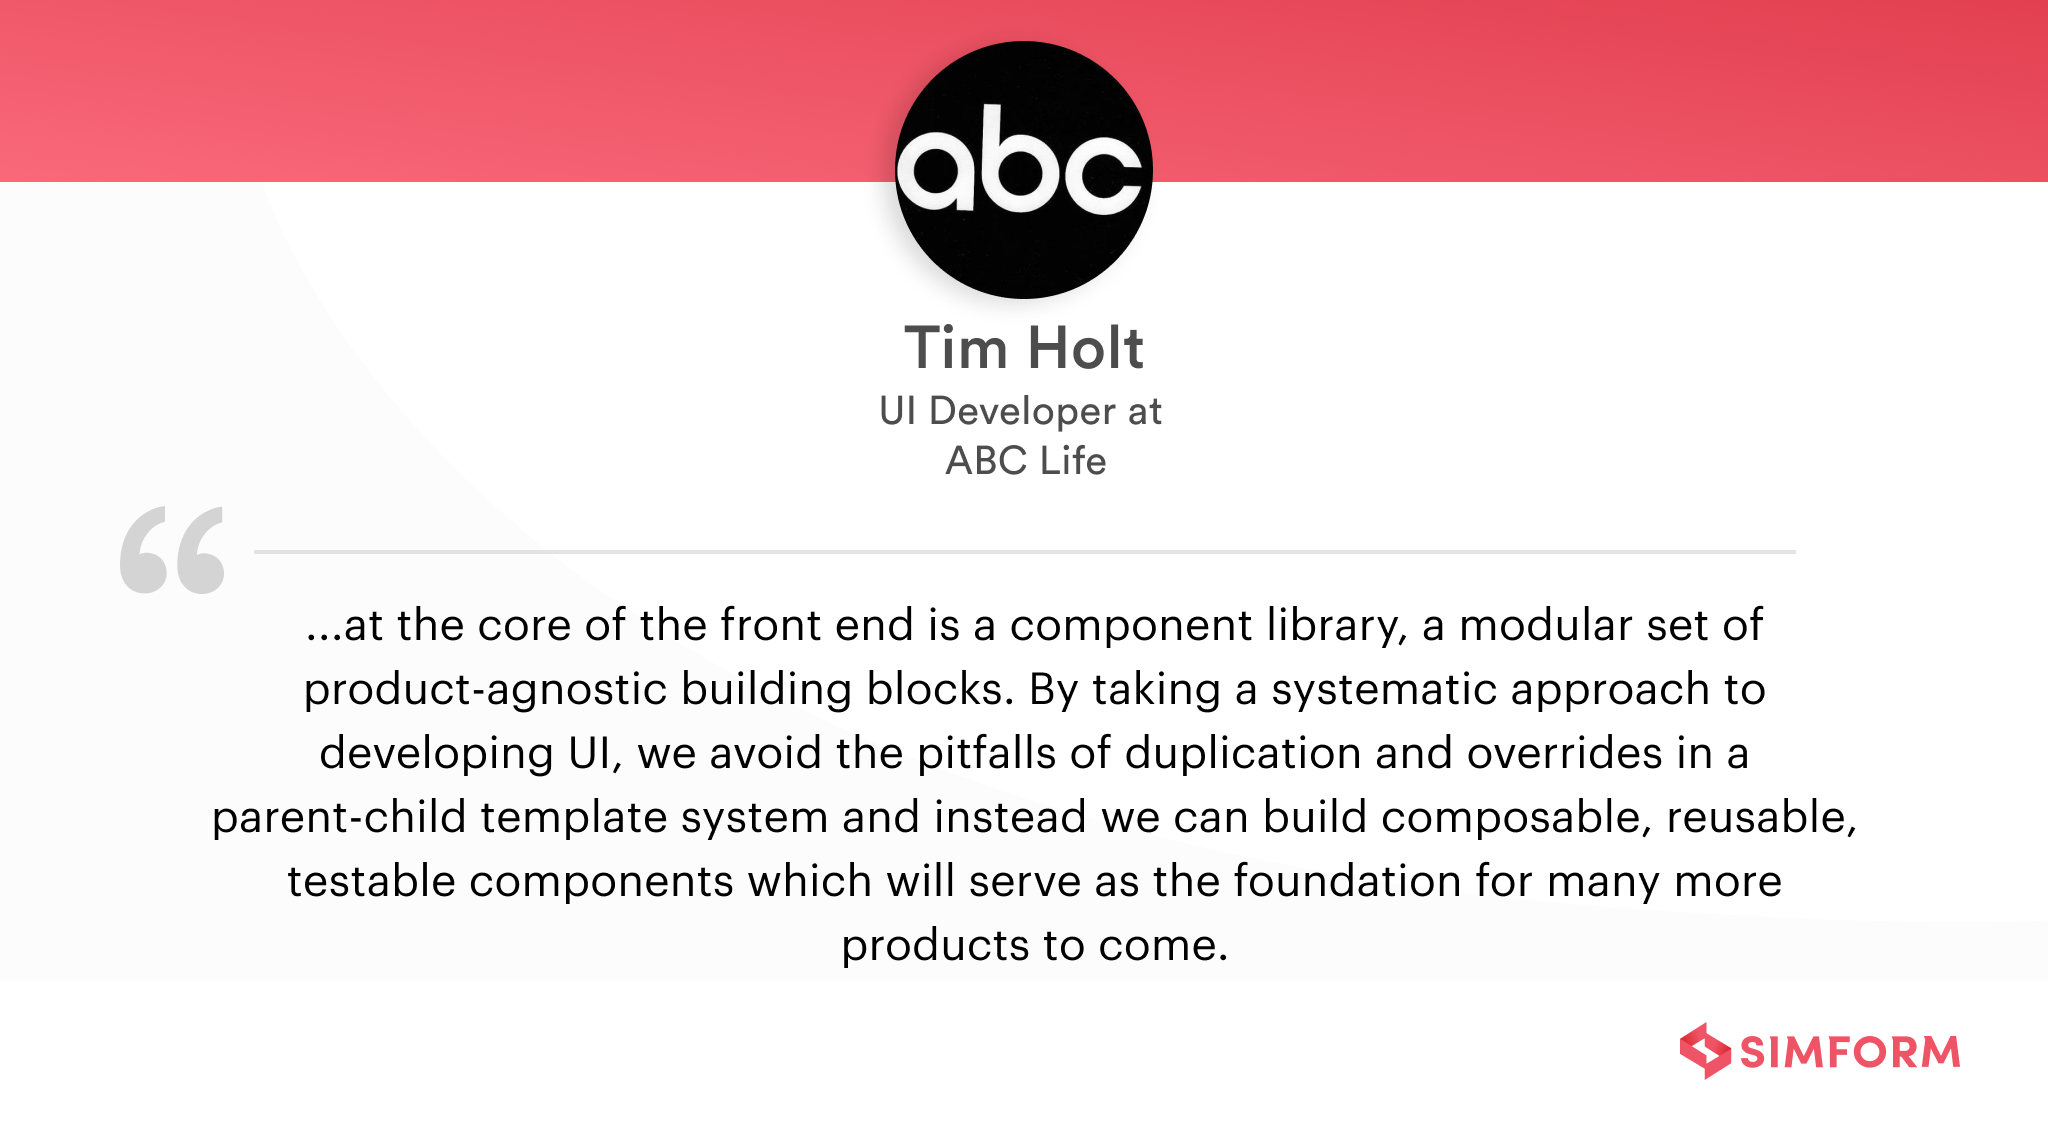 Tim Holt